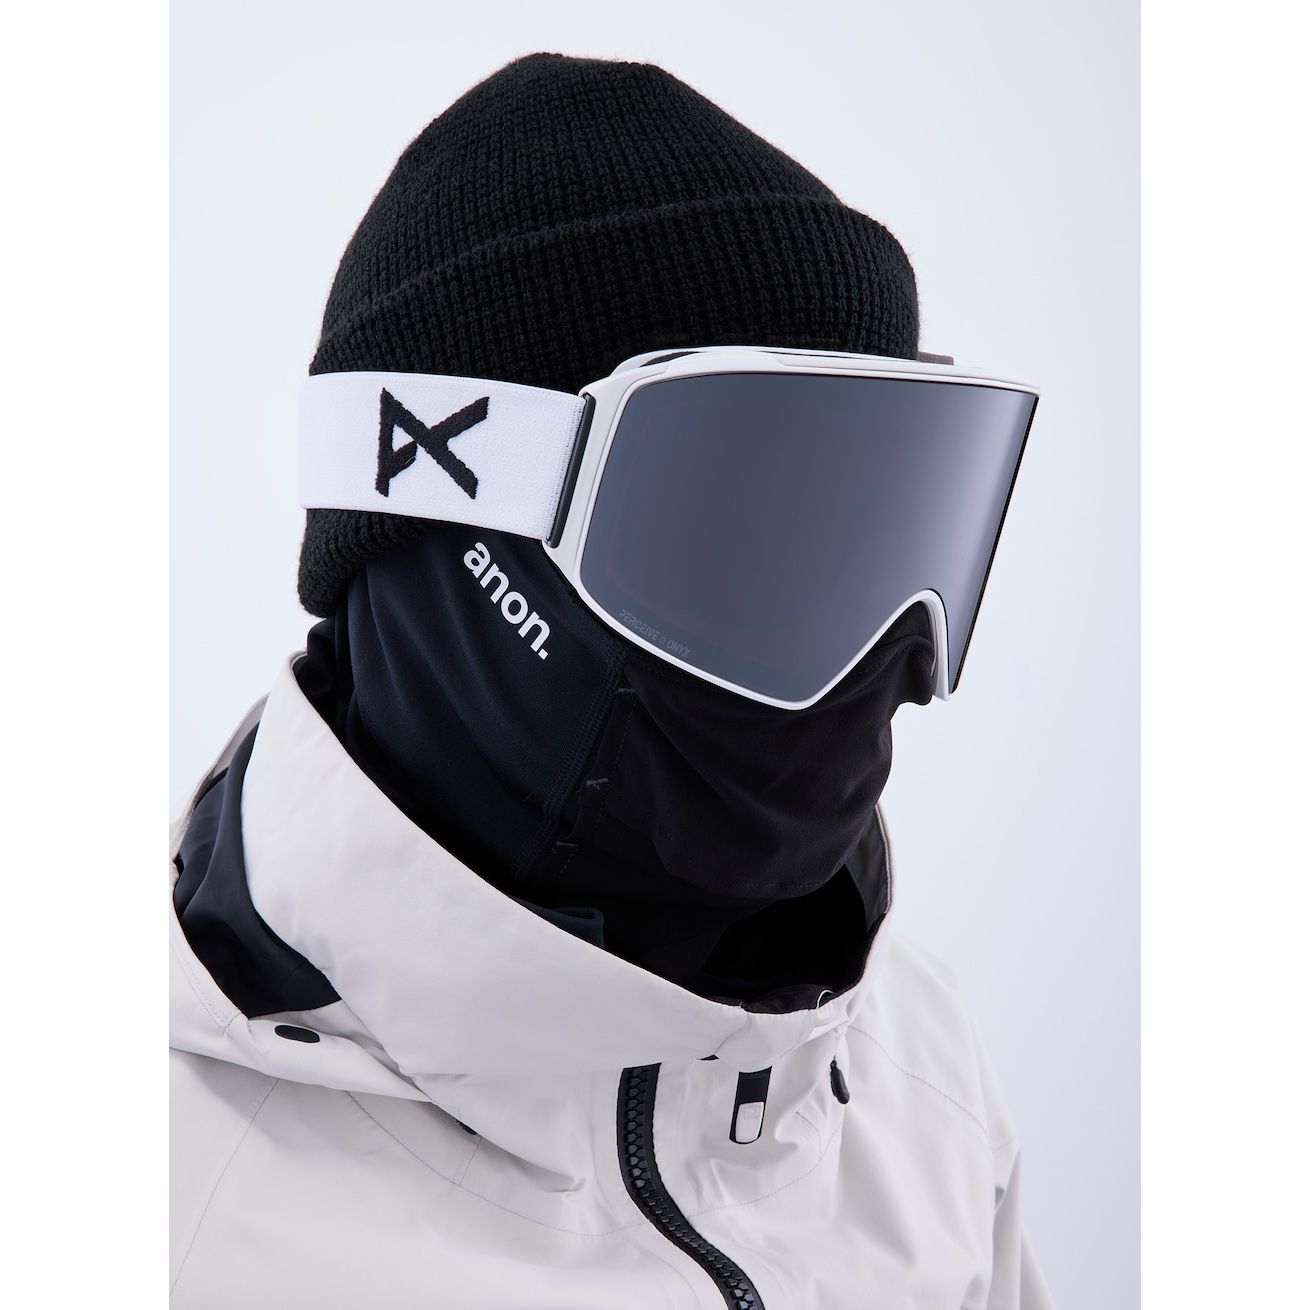 Anon M4 Cylindrical Goggles + Bonus Lens + MFI Face Mask - Openbox White Perceive Sunny Onyx Snow Goggles